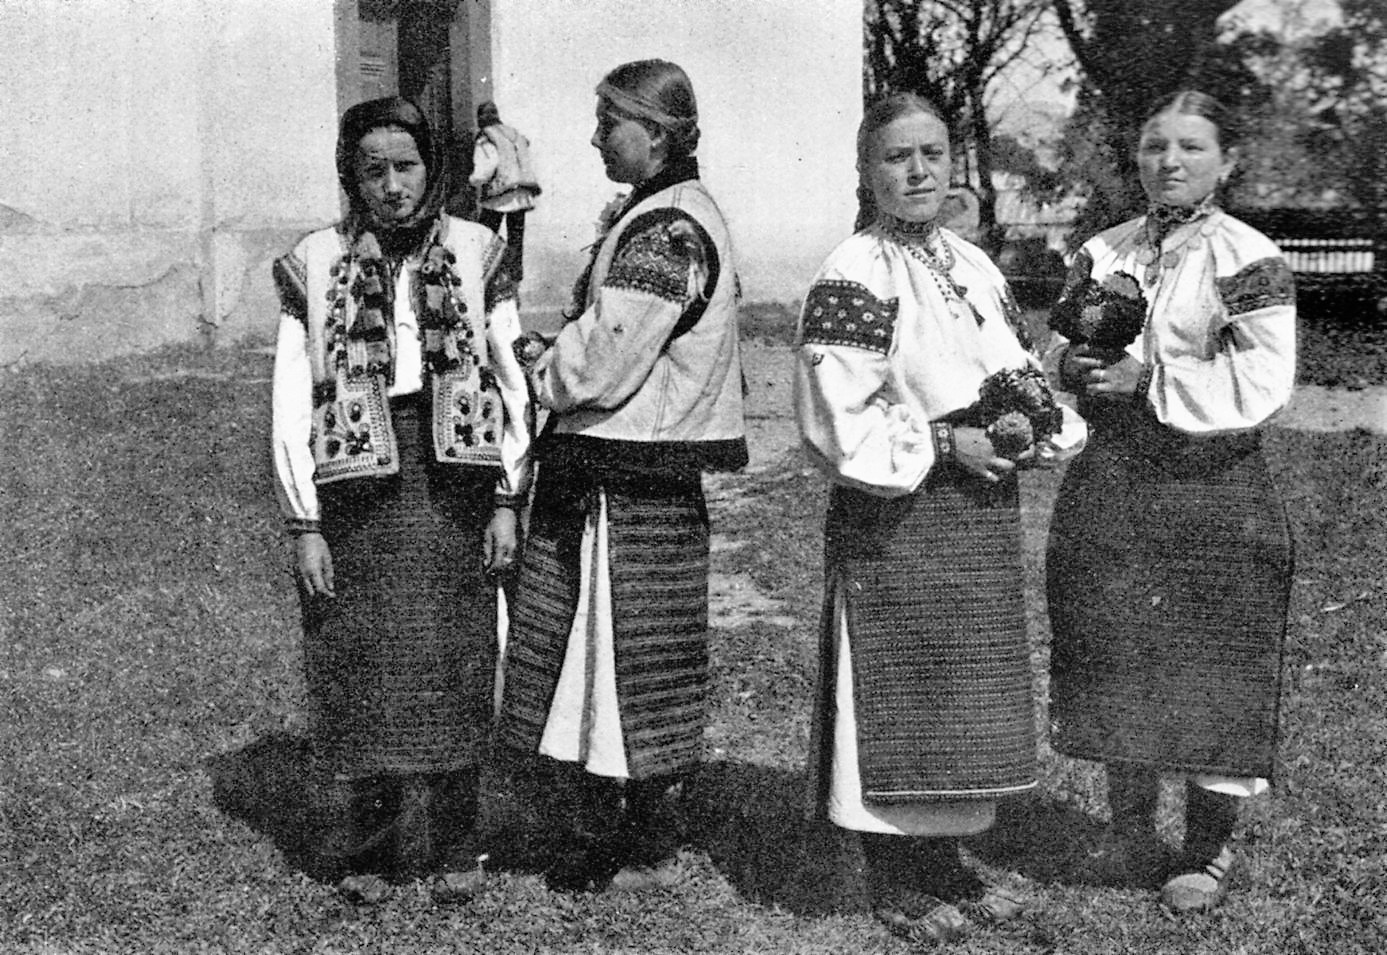 FolkCostume&Embroidery: The 6 types of Ukrainian Folk Costume